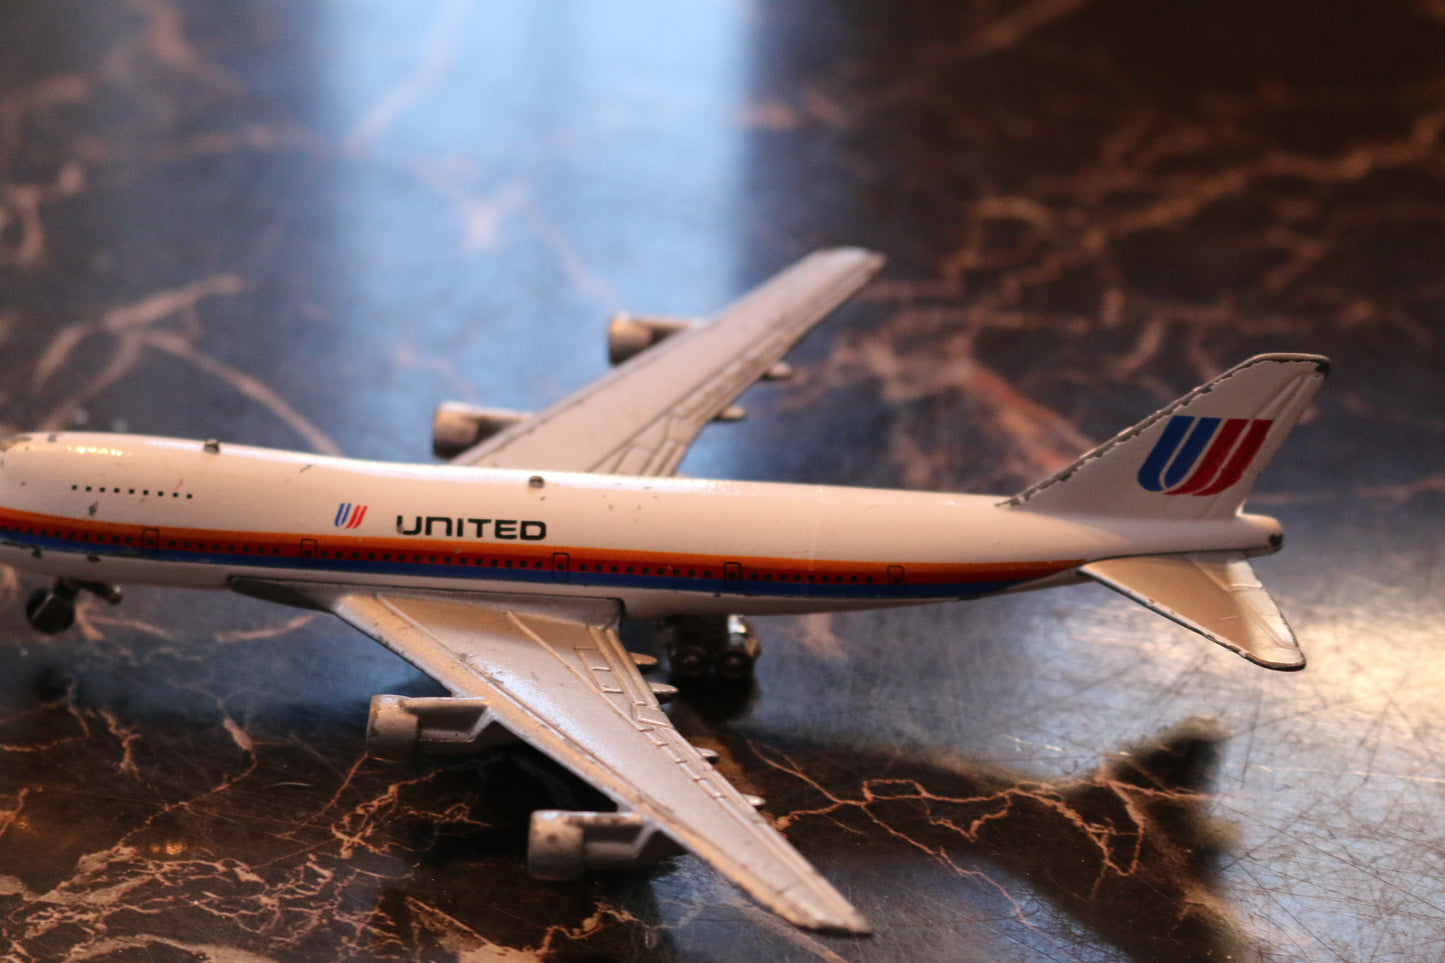 Ertl Diecast Plane Airplane United Airlines Used